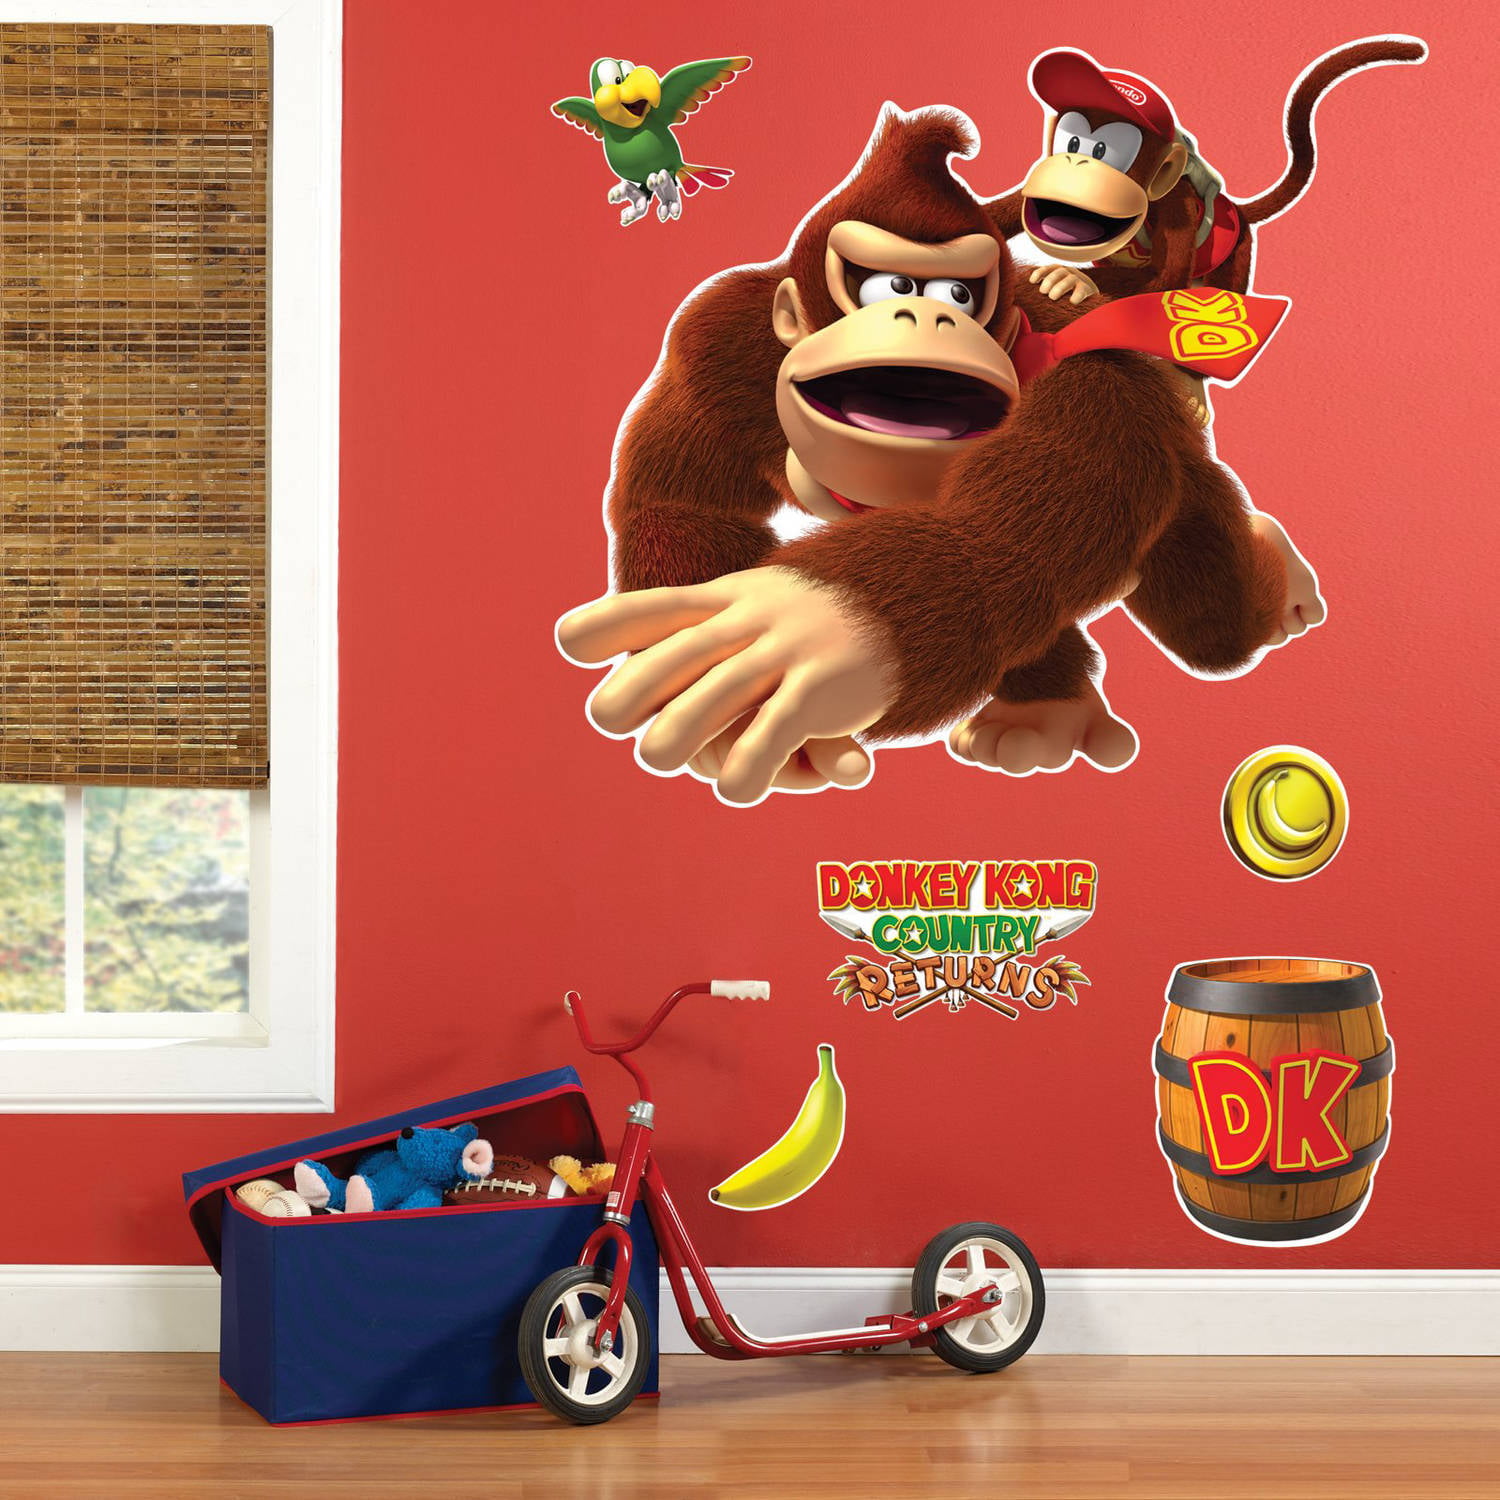 Donkey Kong Magic Window Wall Smash Art Sticker Self Adhesive Vinyl Poster V2* 